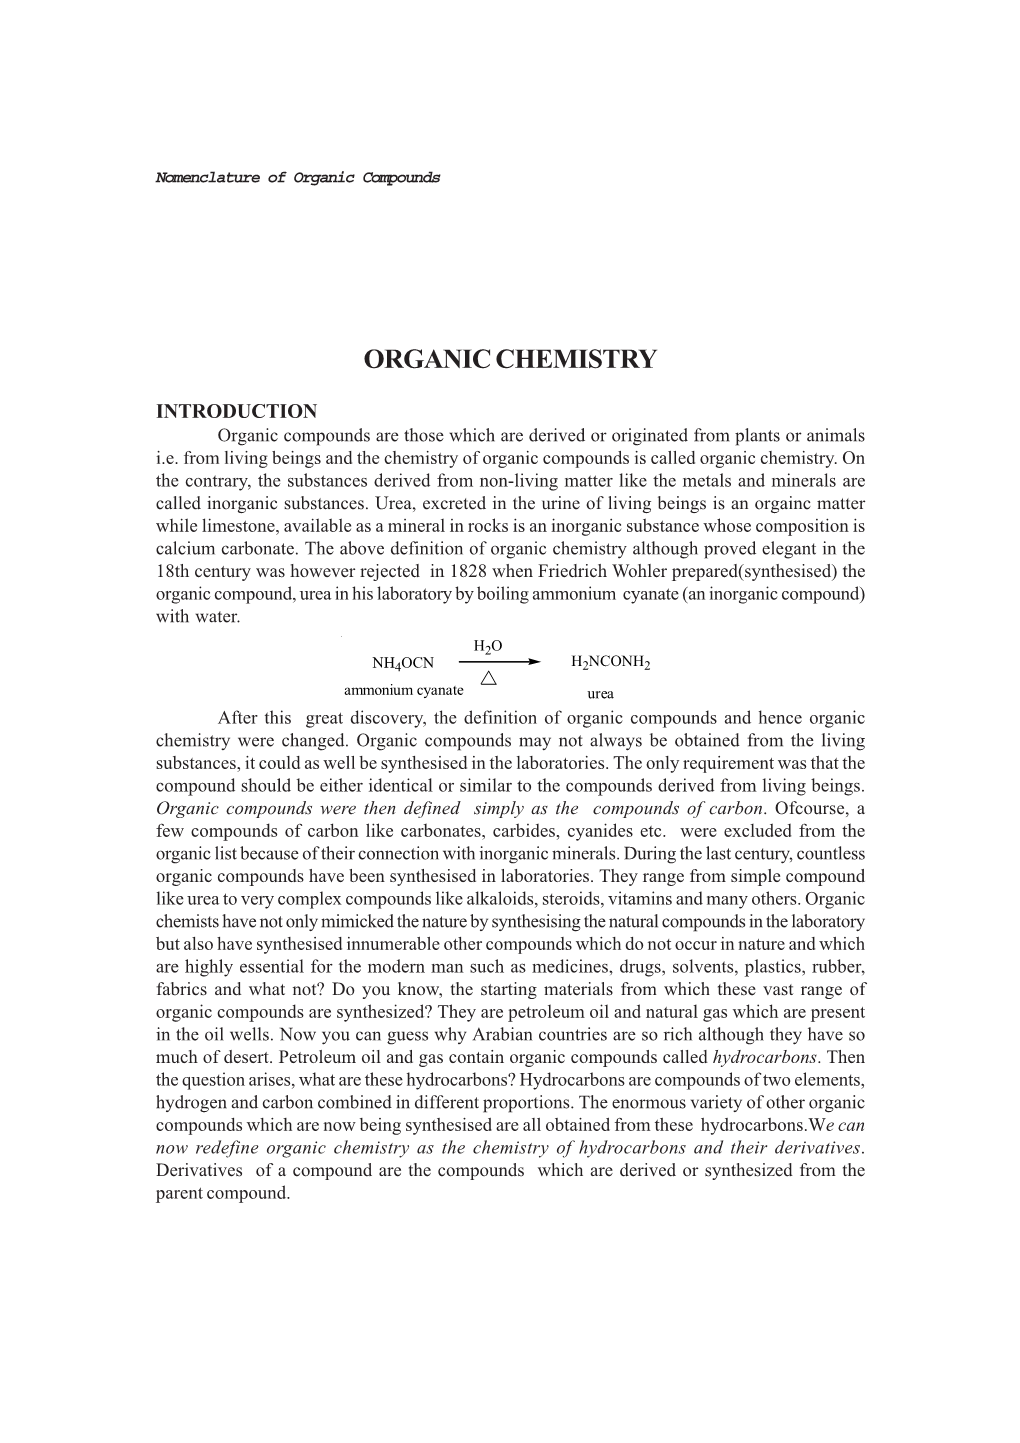 Organic Chemistry – Nomenclature